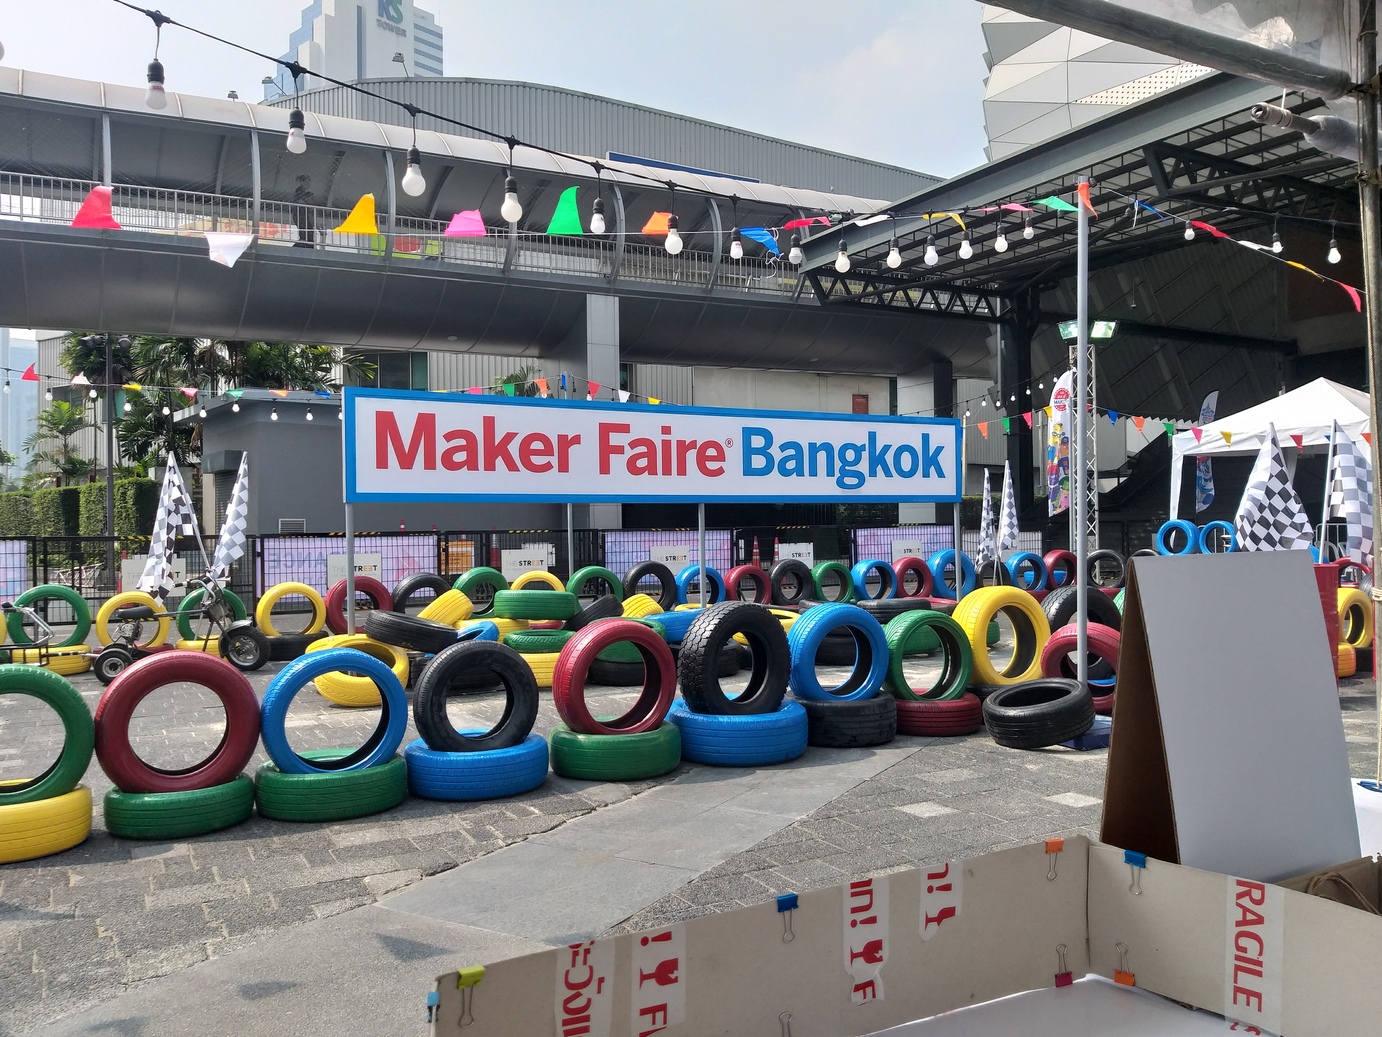 Maker Faire Bangkok 2020